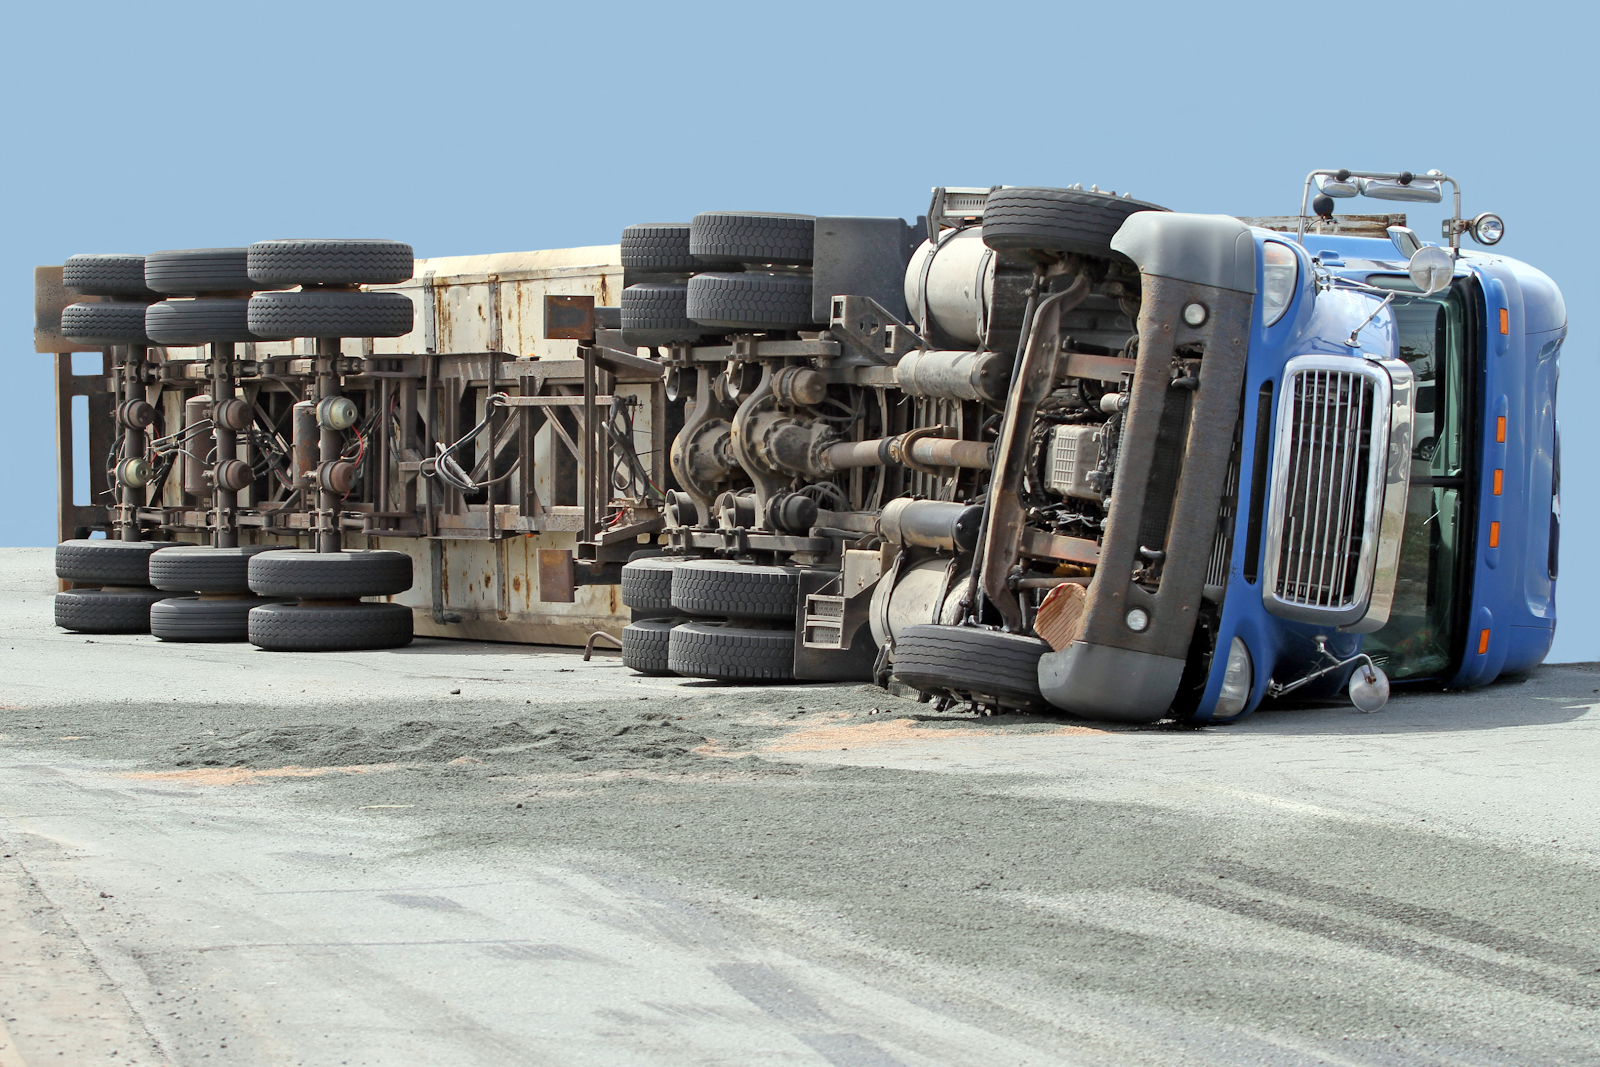 tractor trailer accident in alexandria